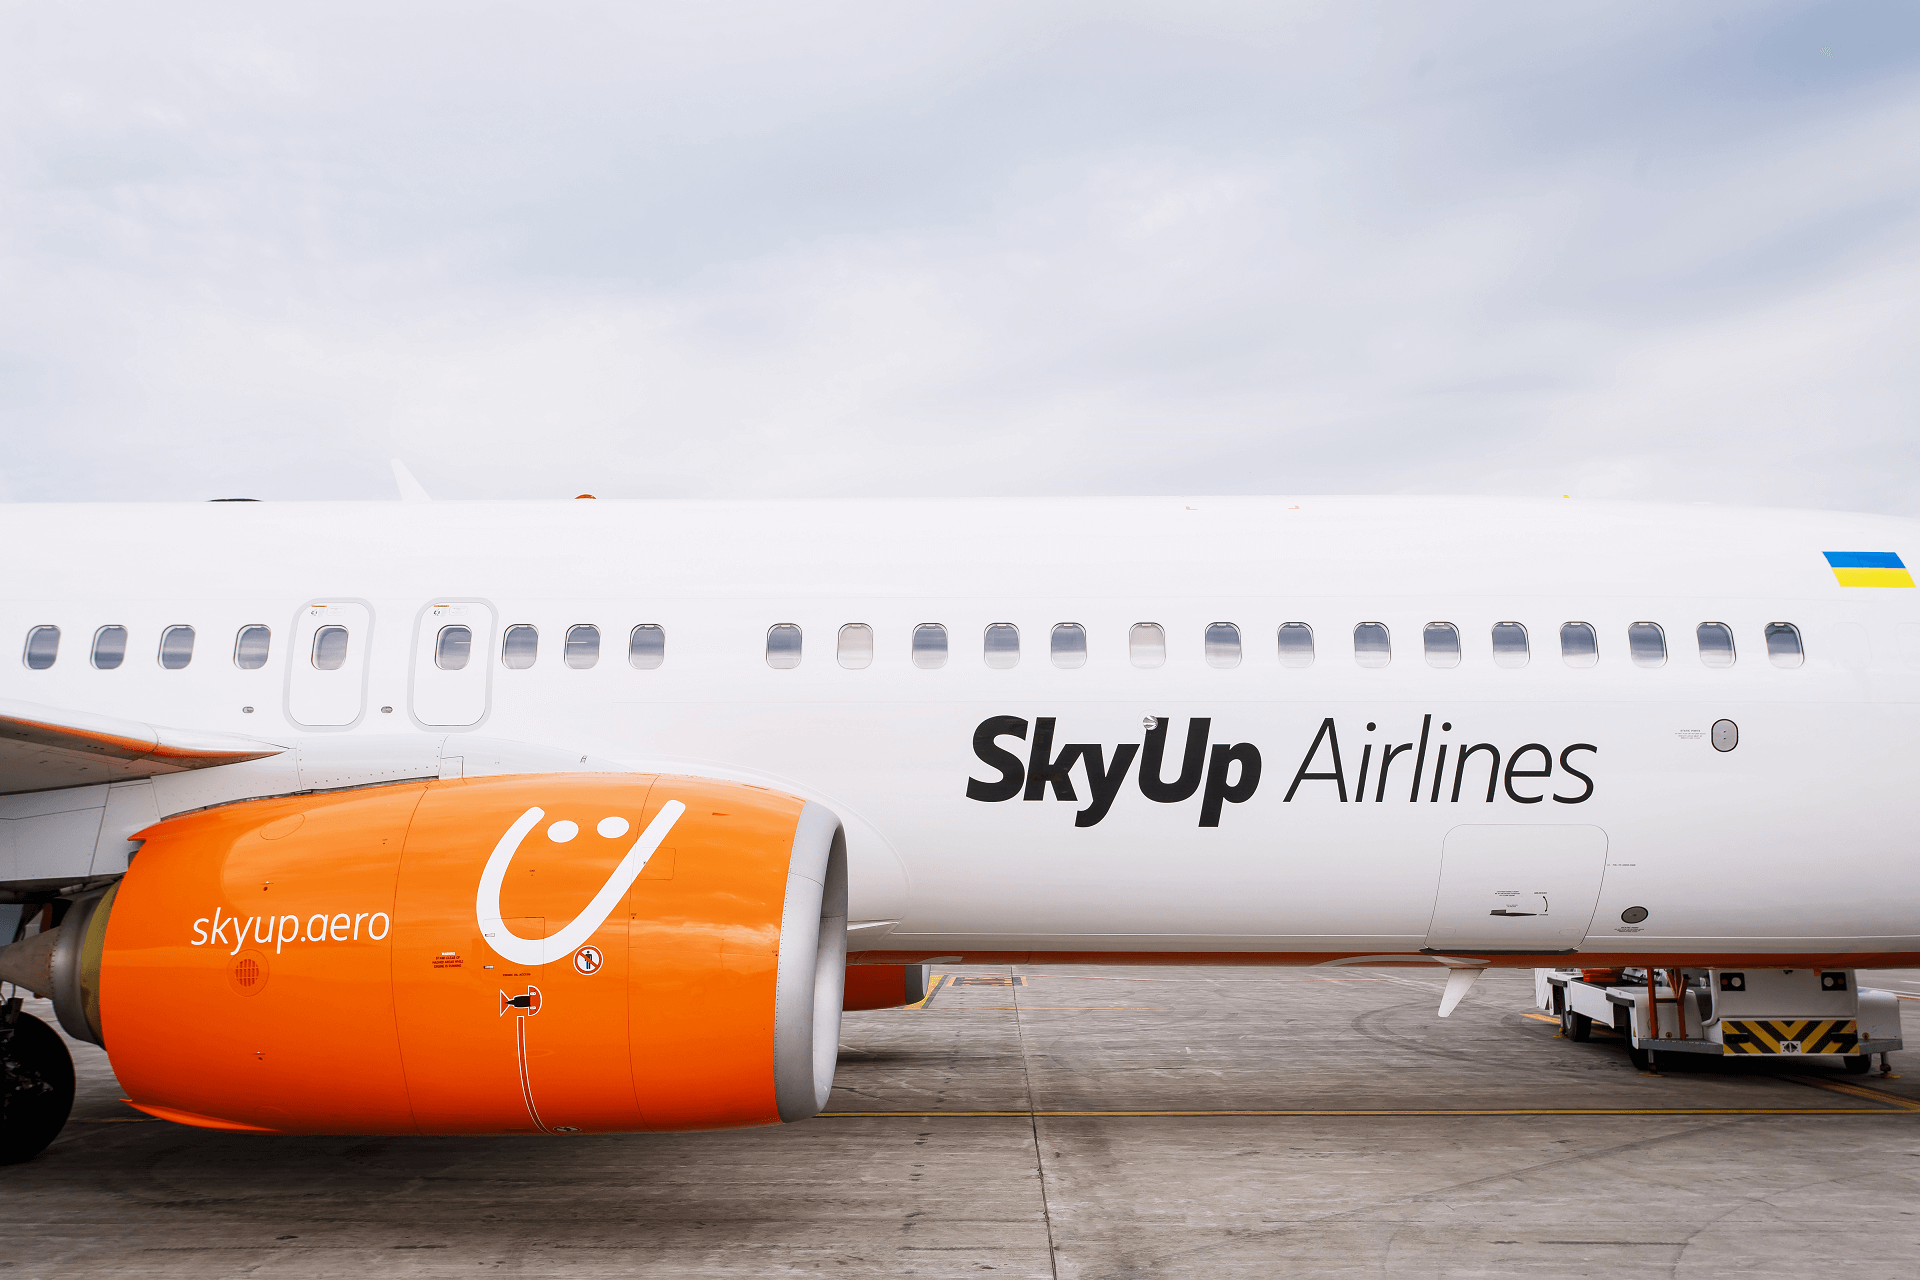 skyup airlins plane logo